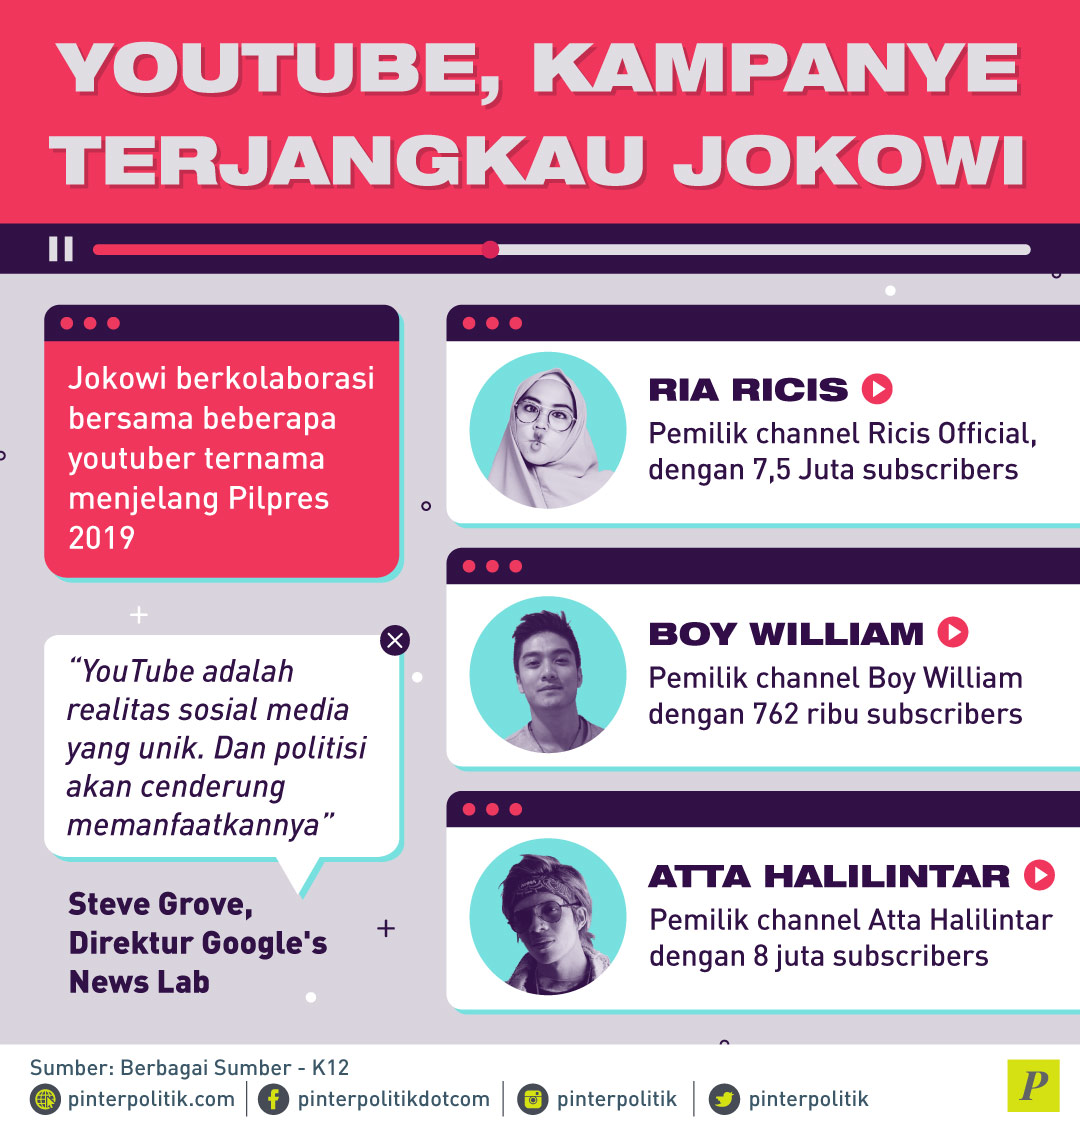 Kampanye Terjangkau Jokowi Via Youtube